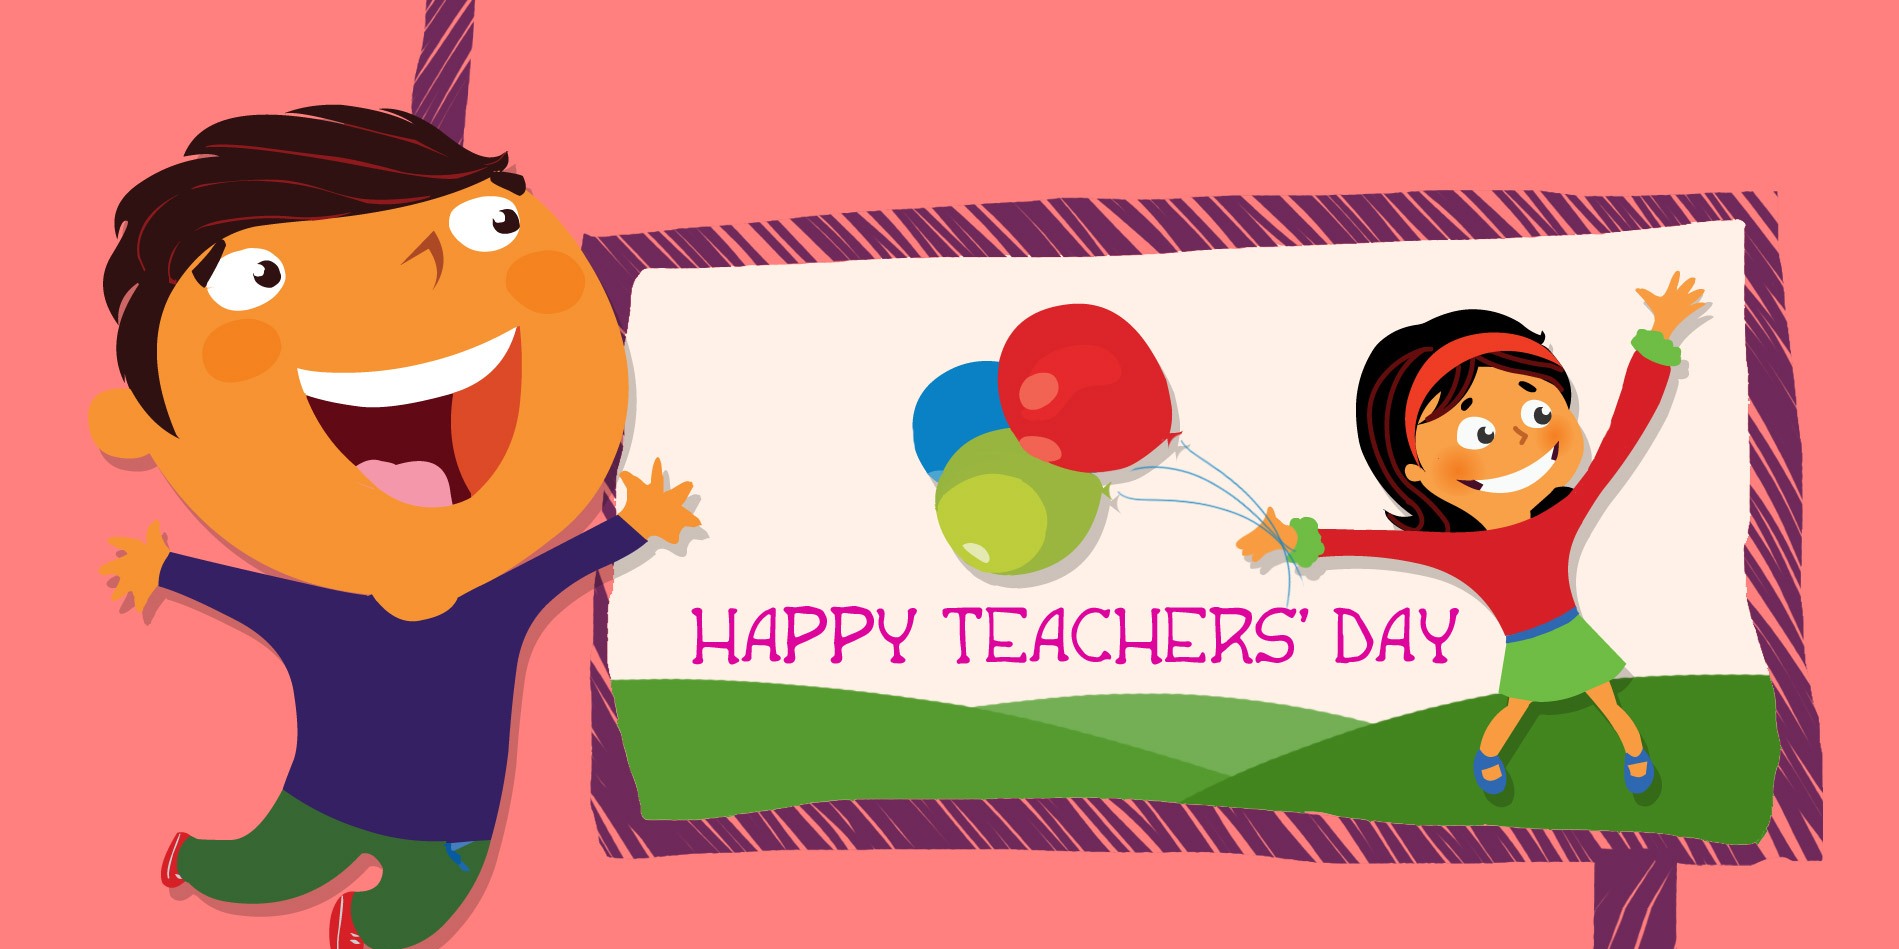 Happy Teachers Day 2015 Wallpaper with kids for desktop